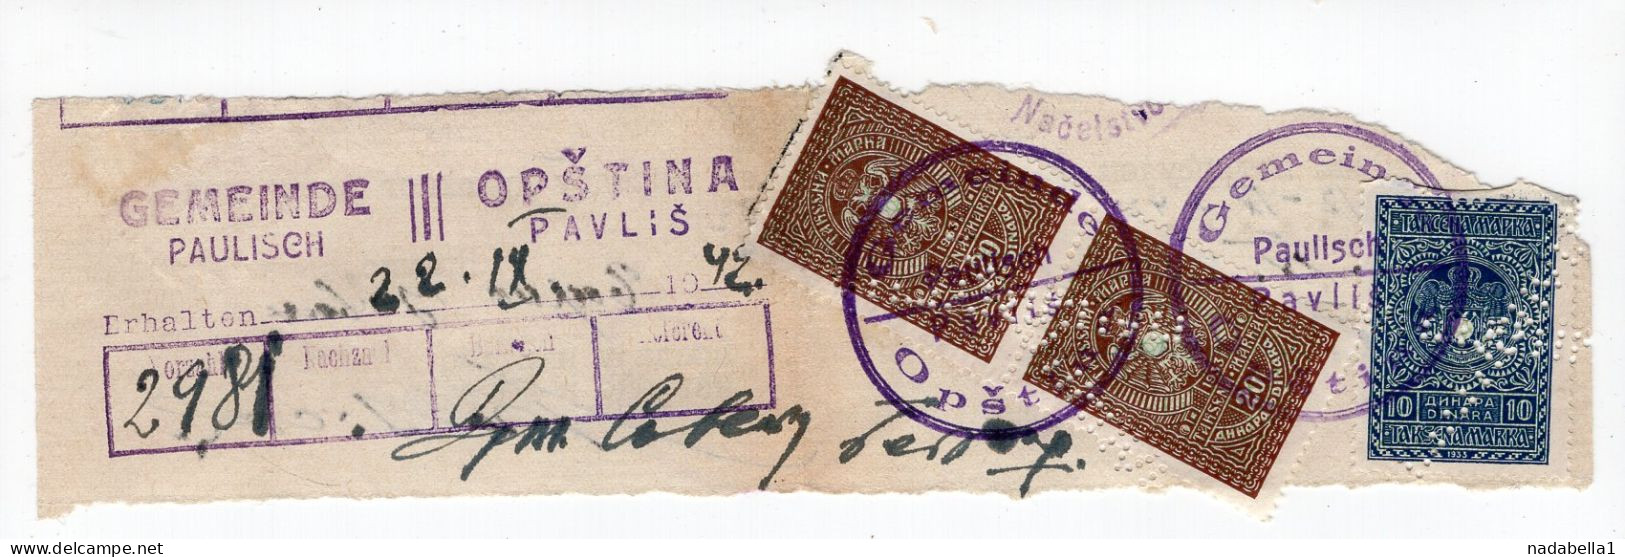 1942. WWII SERBIA,PAVLIŠ,GERMAN OCCUPATION,DELIVERY RECEIPT,NOTE,3 REVENUE STAMPS - Portomarken